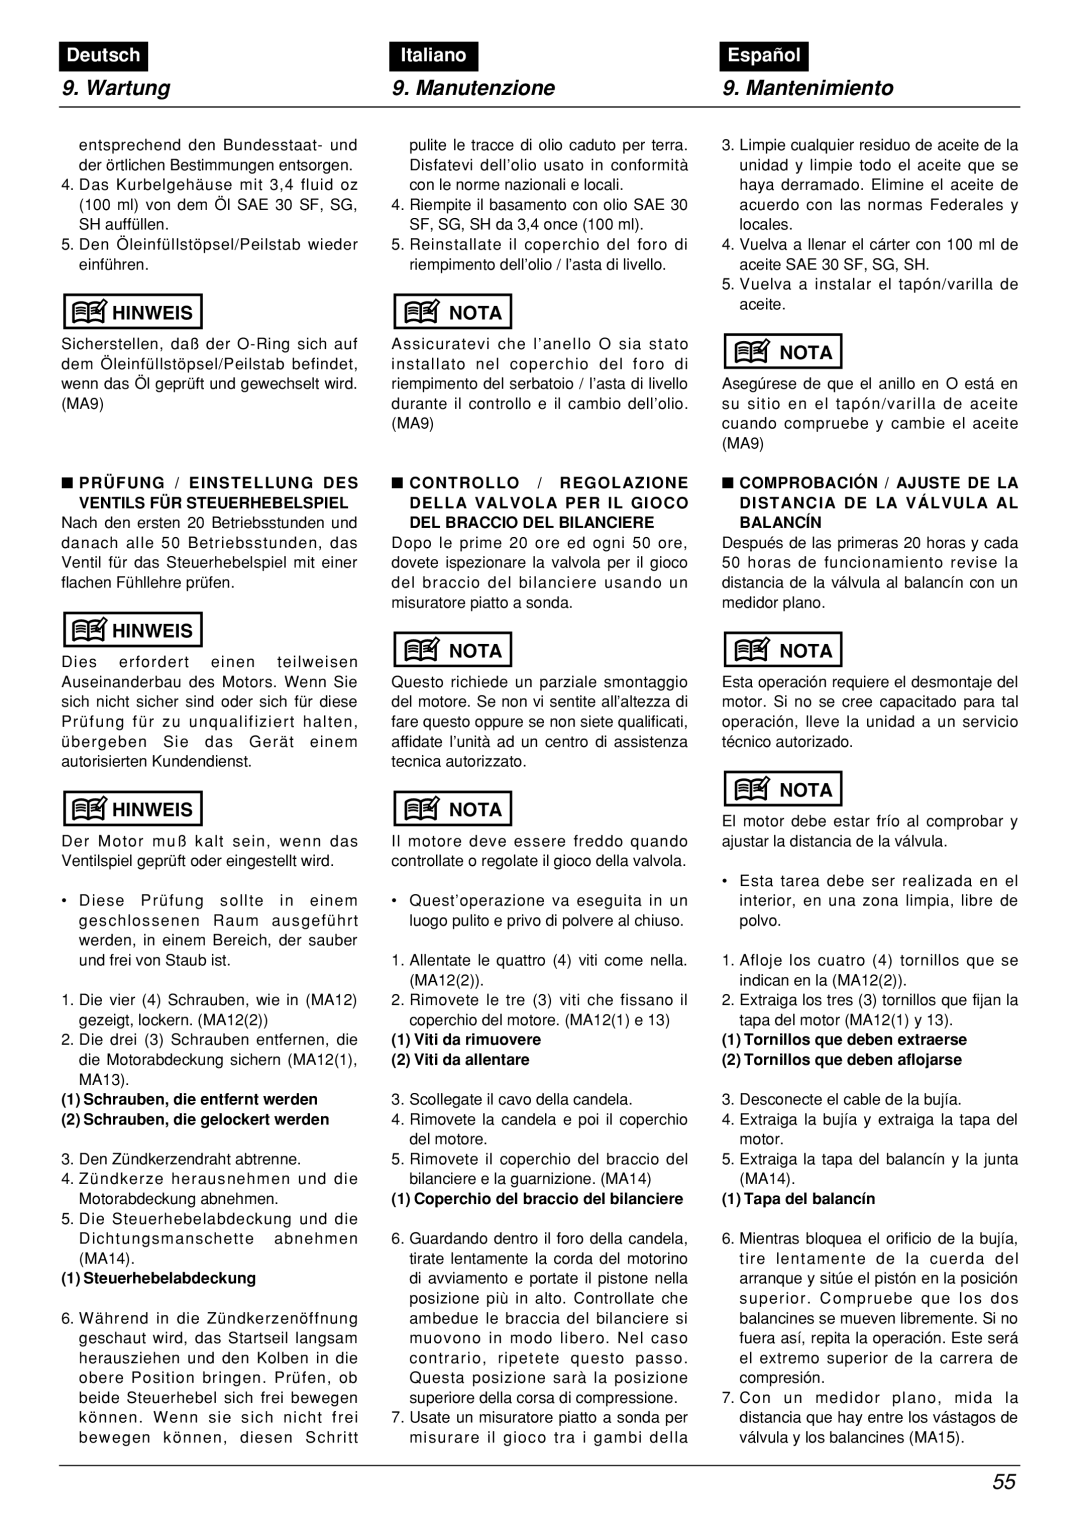 Zenoah BCX2601DL manual Wartung, Manutenzione, Mantenimiento, Deutsch, Italiano, Español 